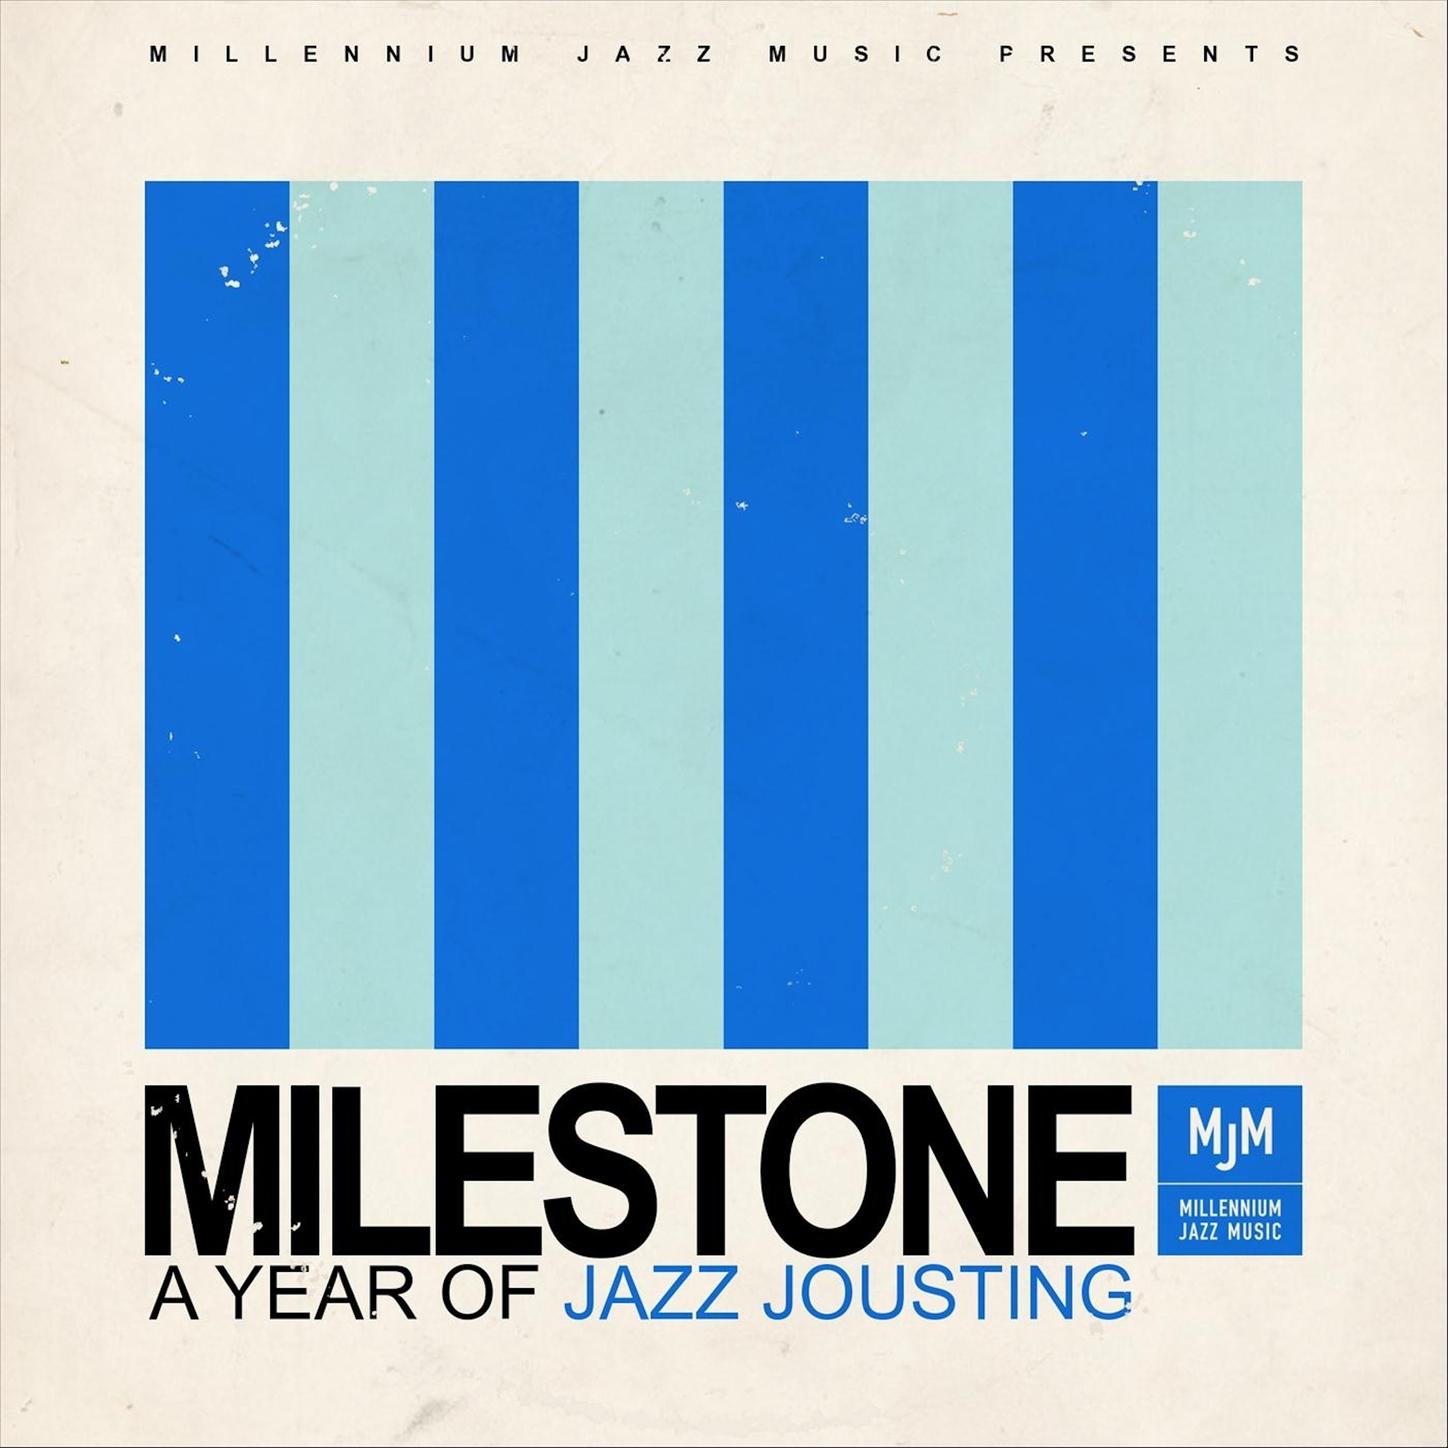 Milestone: A Year of Jazz Jousting